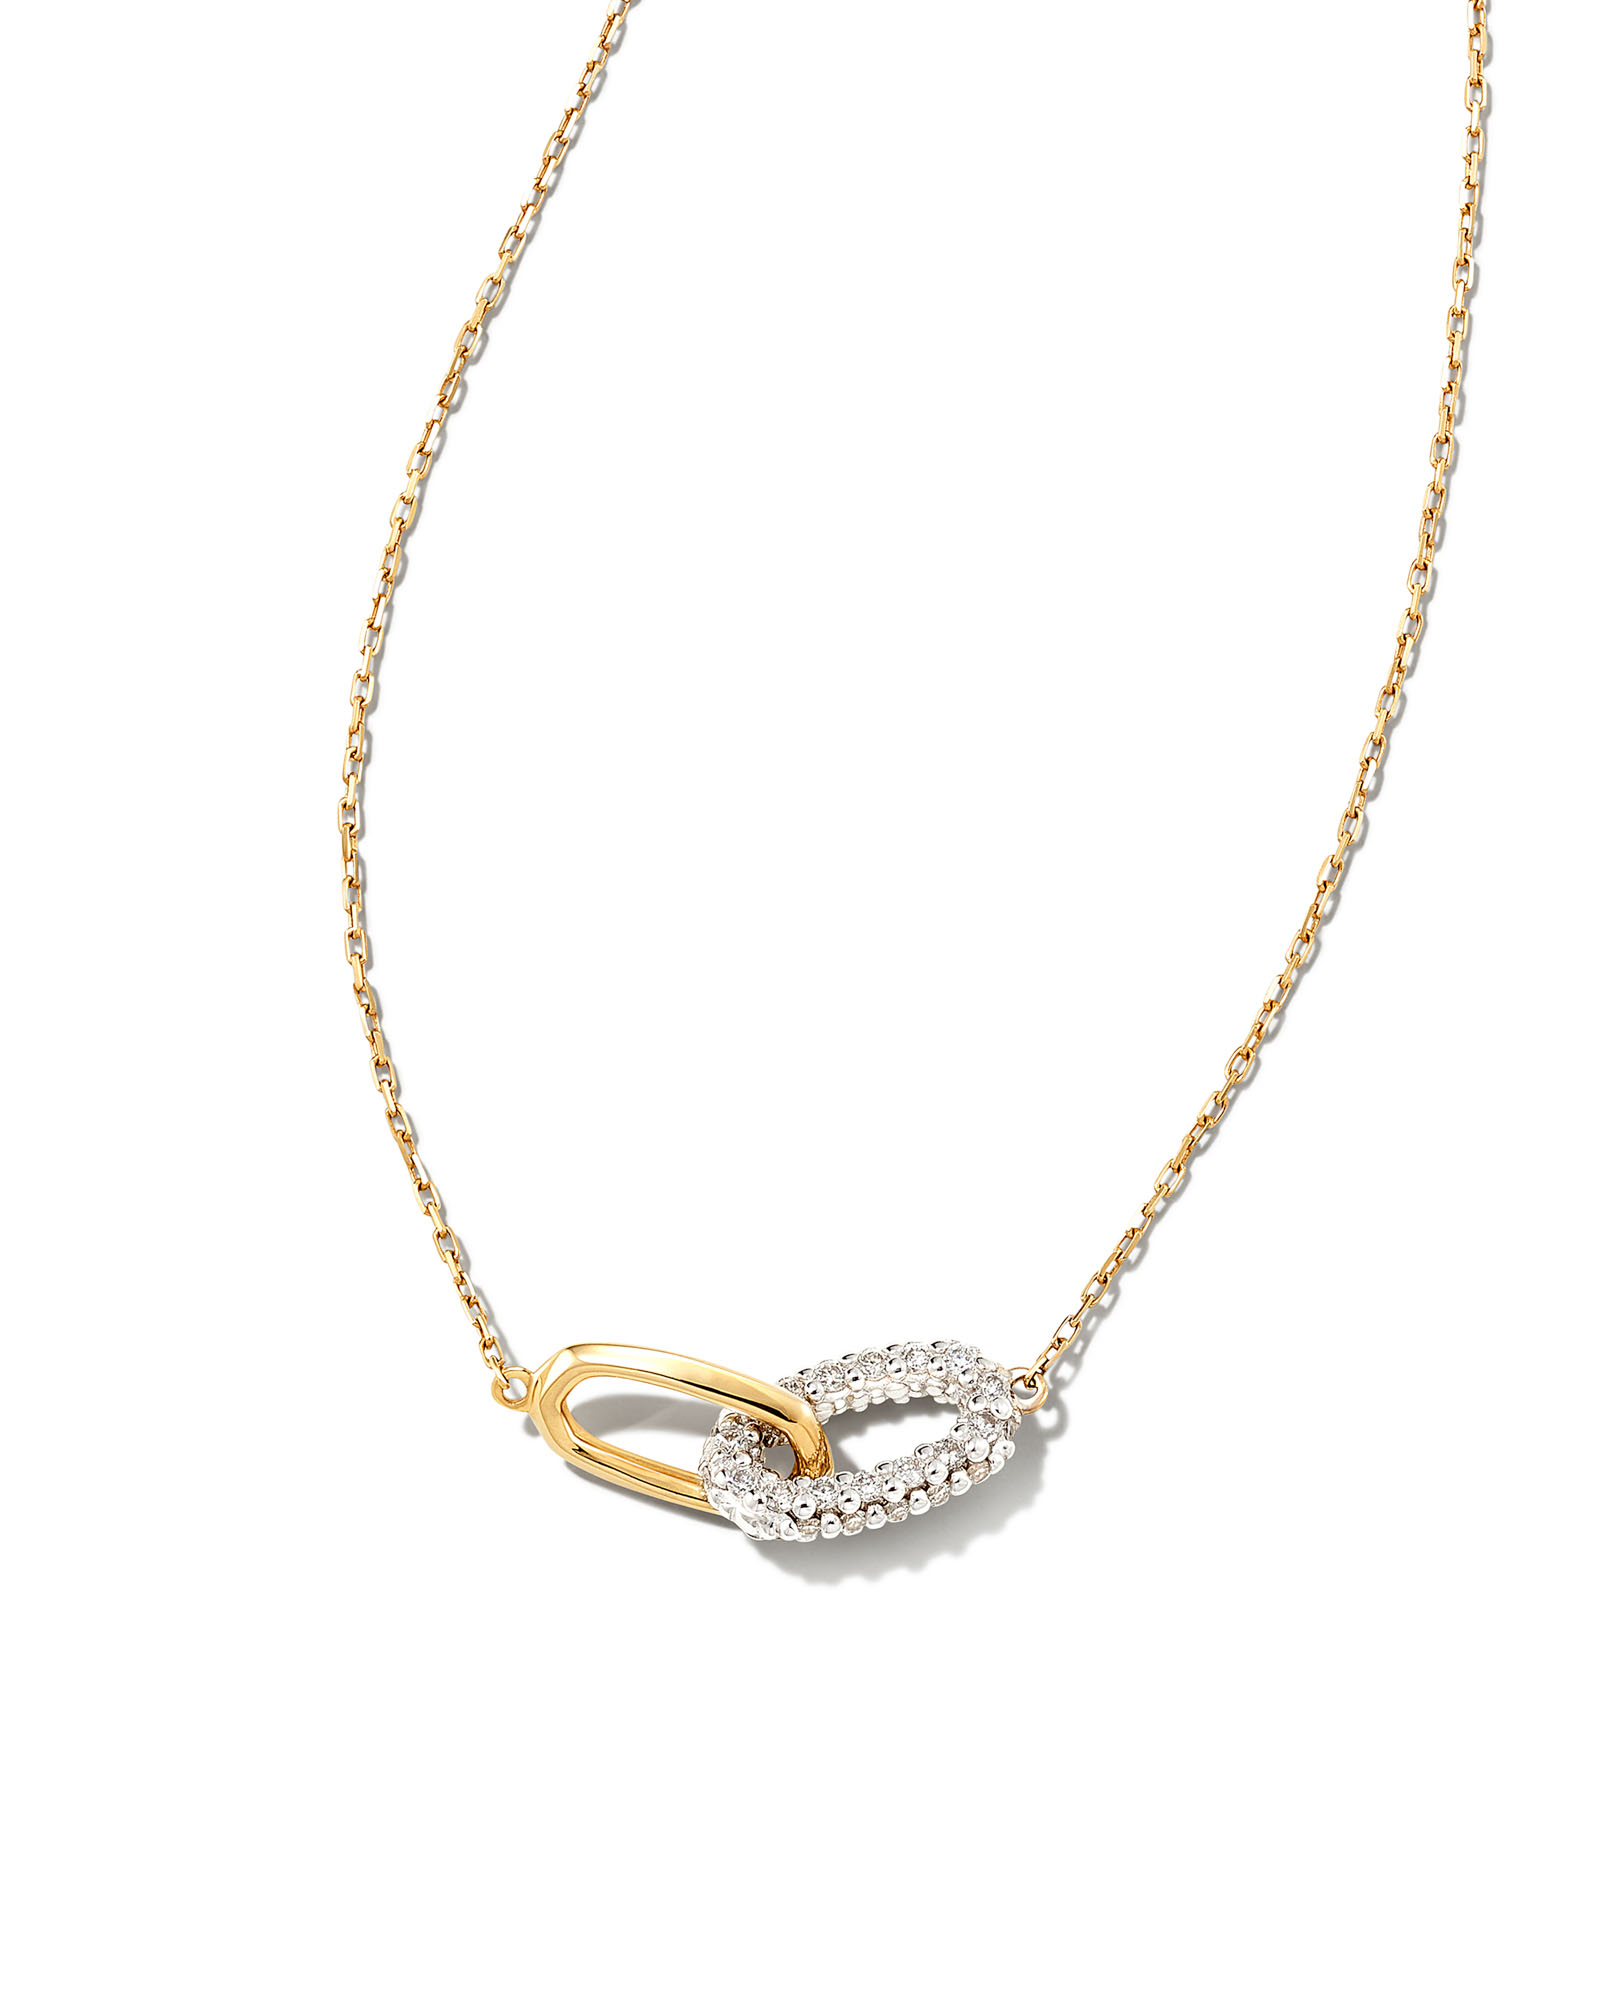 Matilda 14k Yellow Gold Pendant Necklace in White Diamond